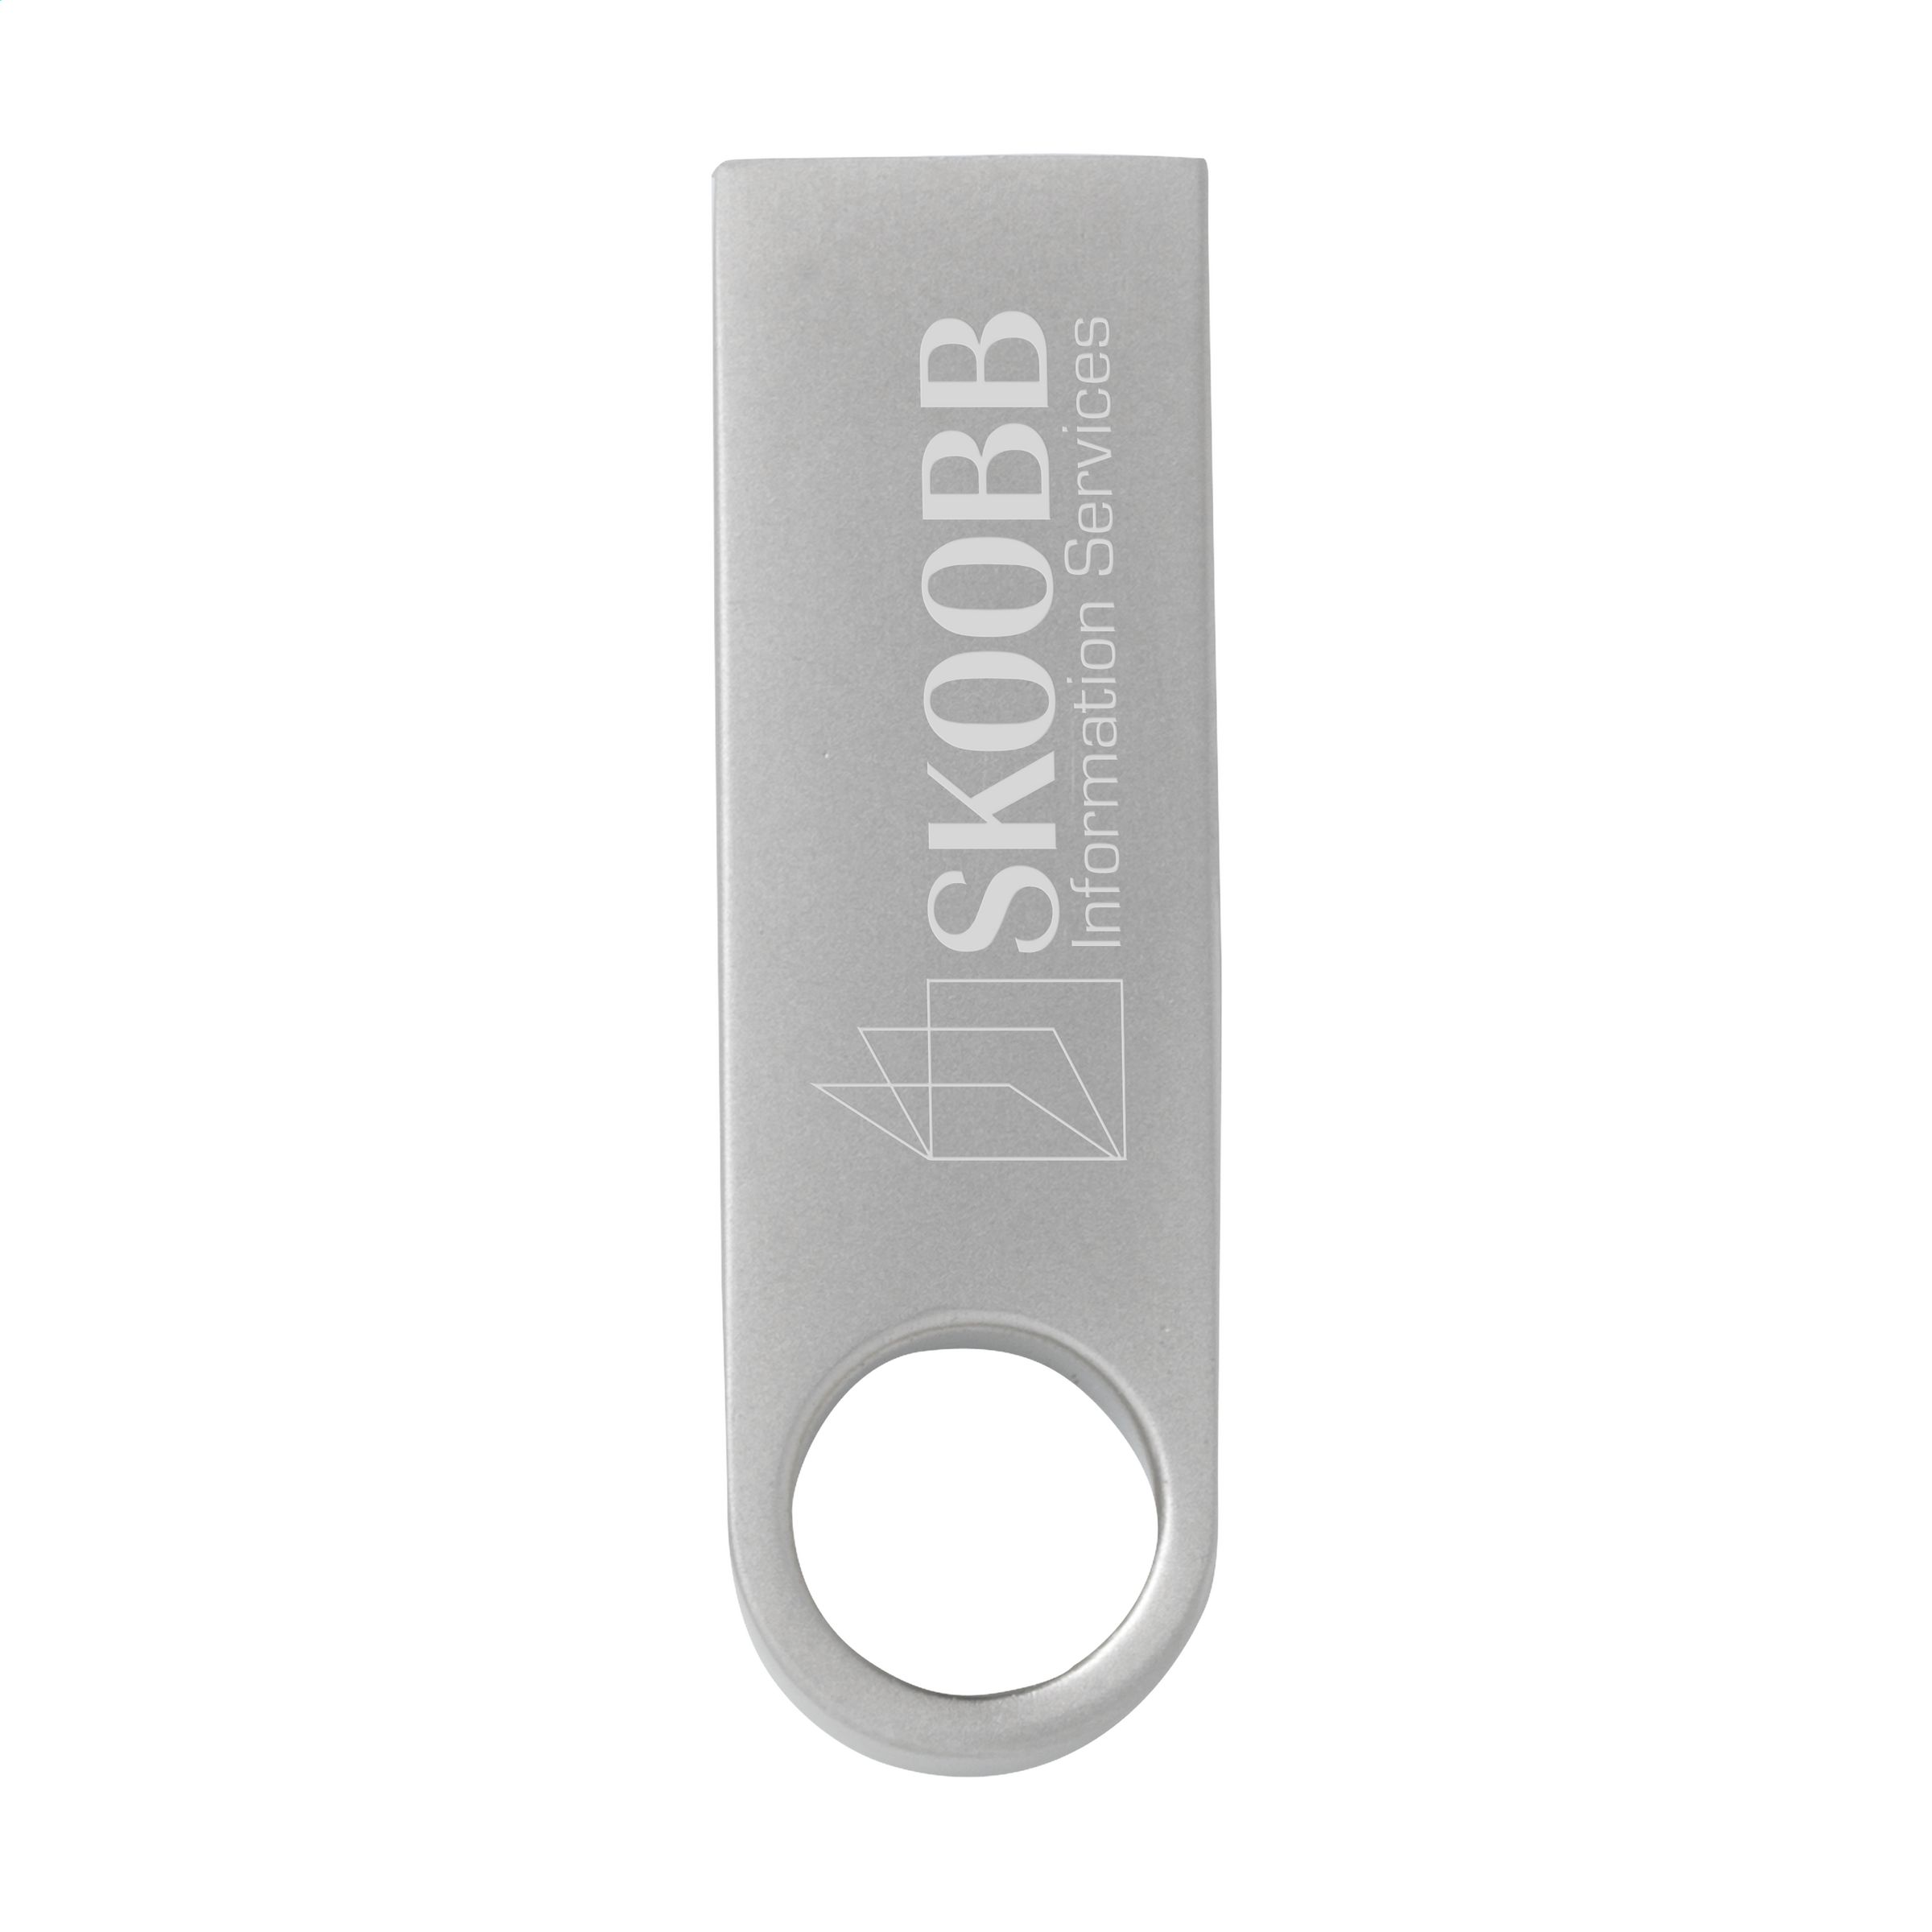 USB SilverSteel - Merano